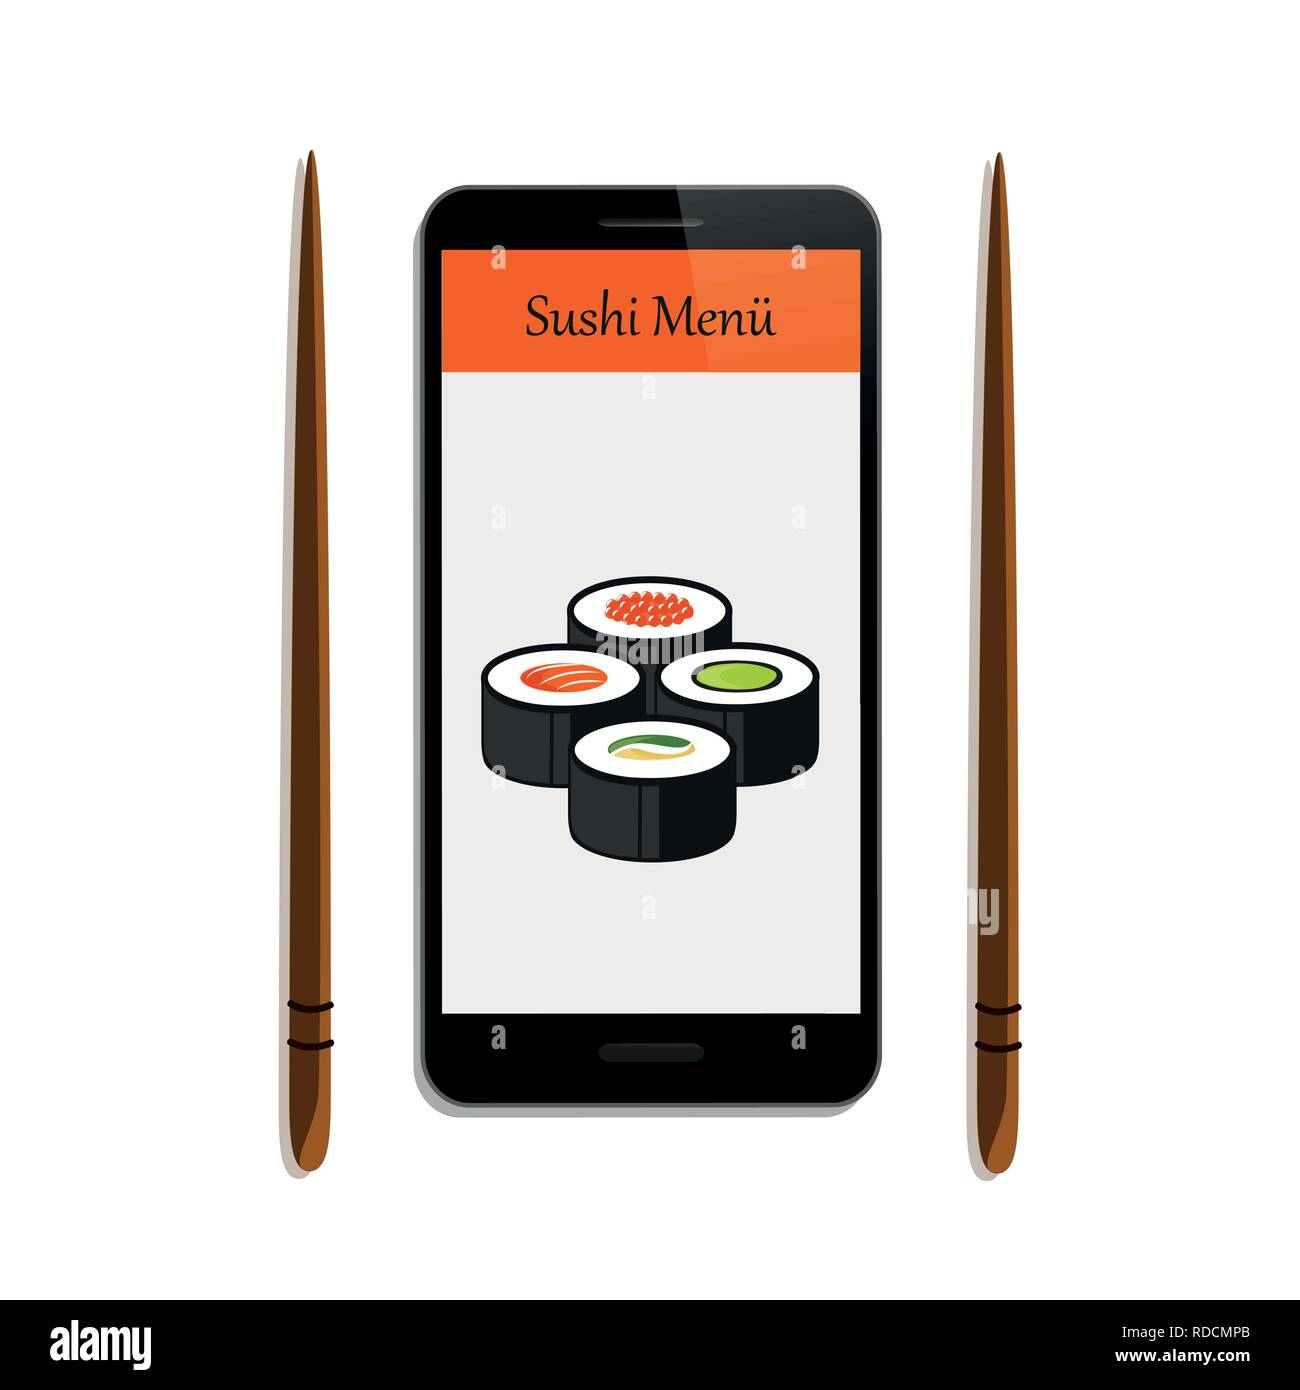 order sushi menu via smartphone vector illustration EPS10 Stock Vector